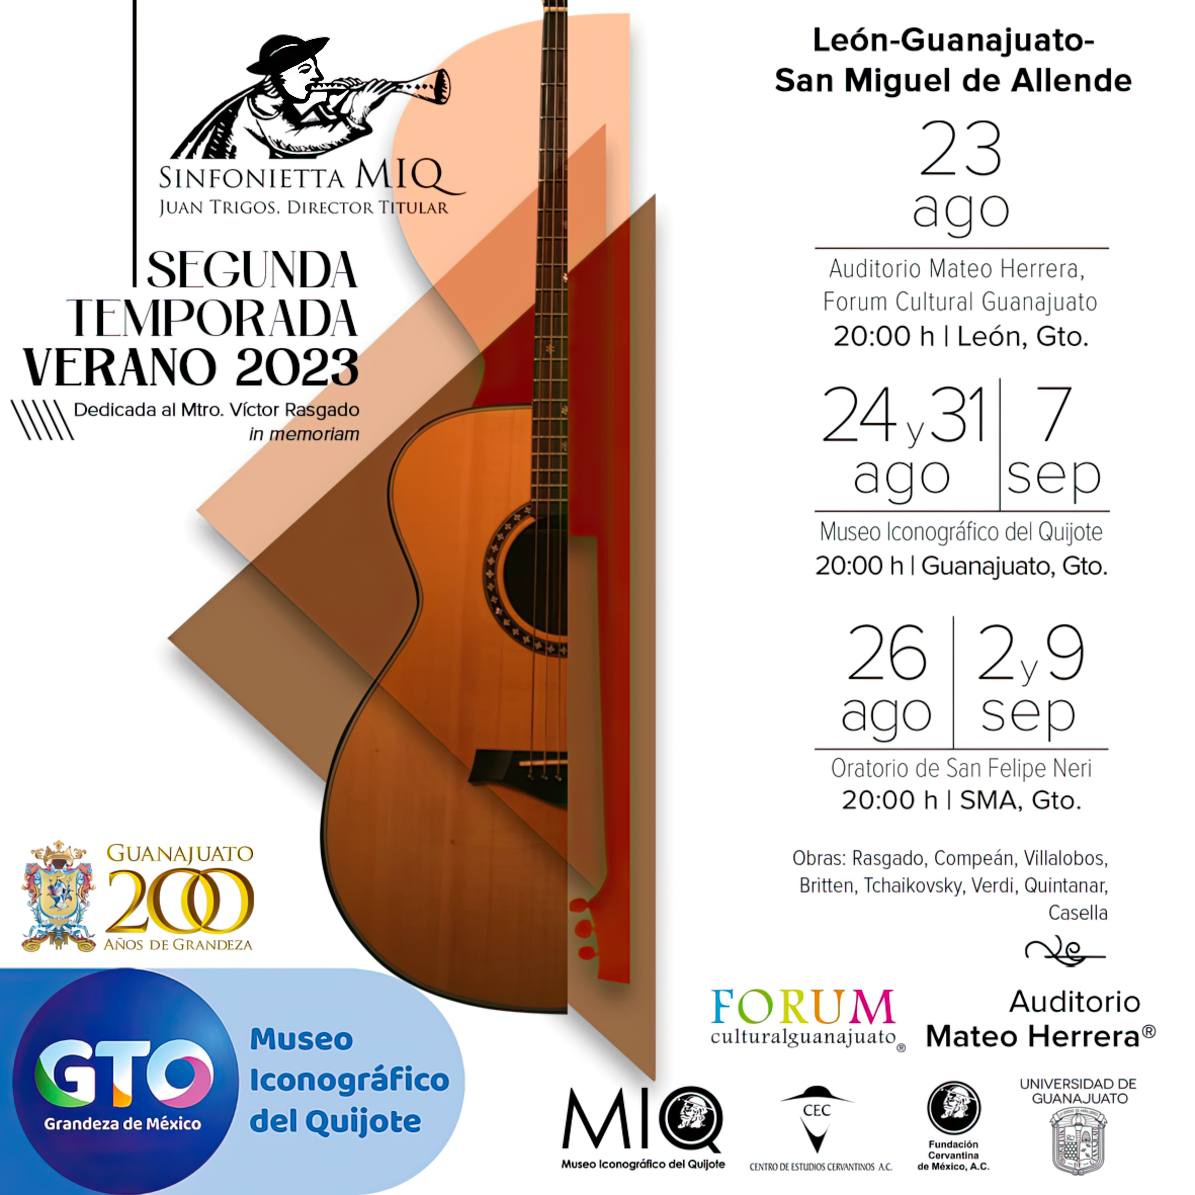 Sinfonietta MIQ - Segunda Temporada - Verano 2023